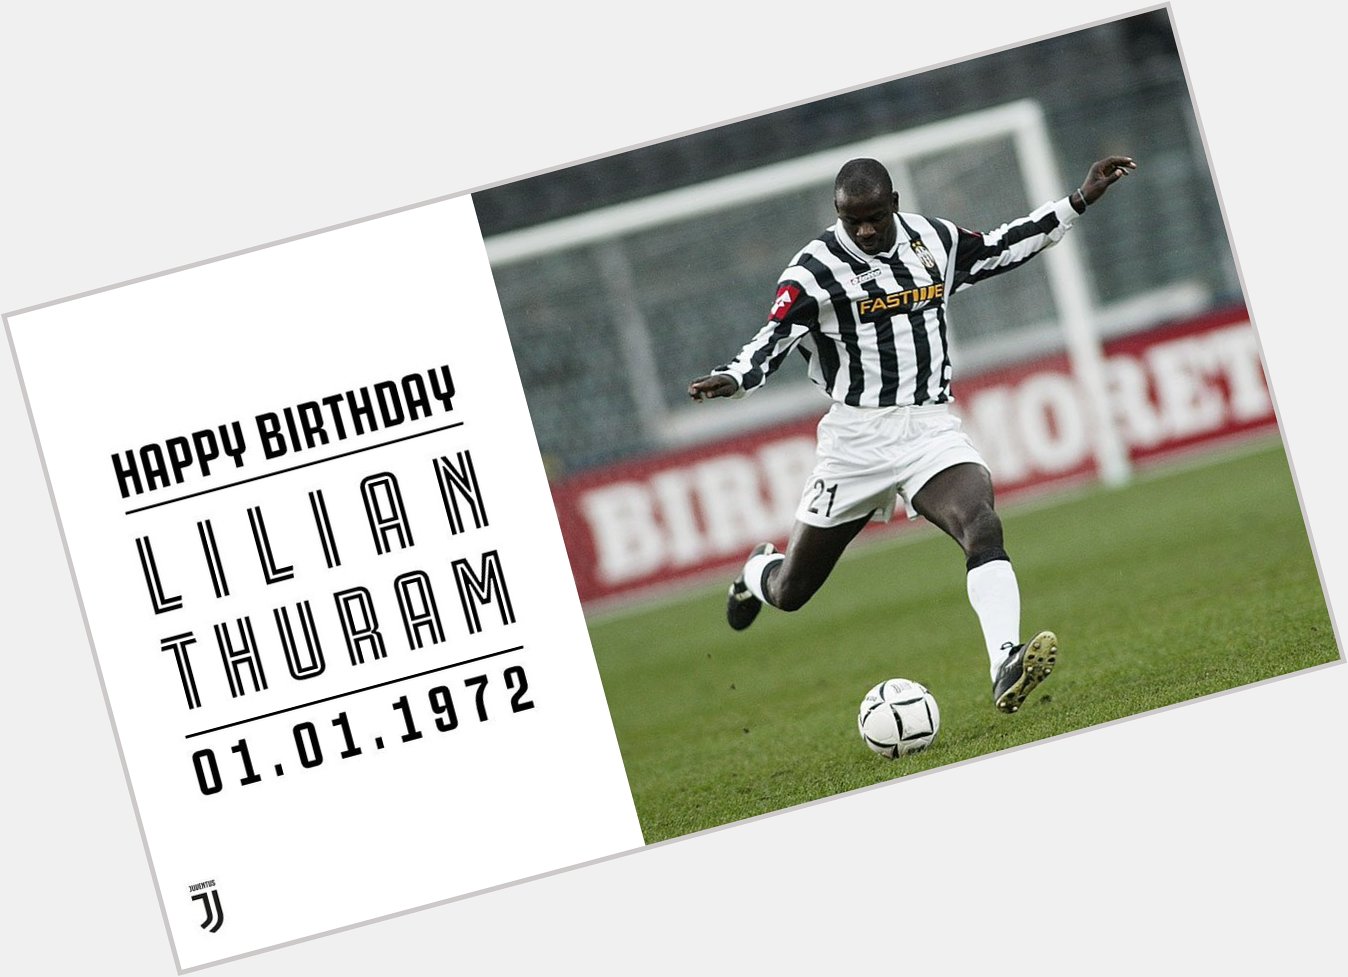  204 matches in Bianconeri seasons, happy birthday to Lilian Thuram! 